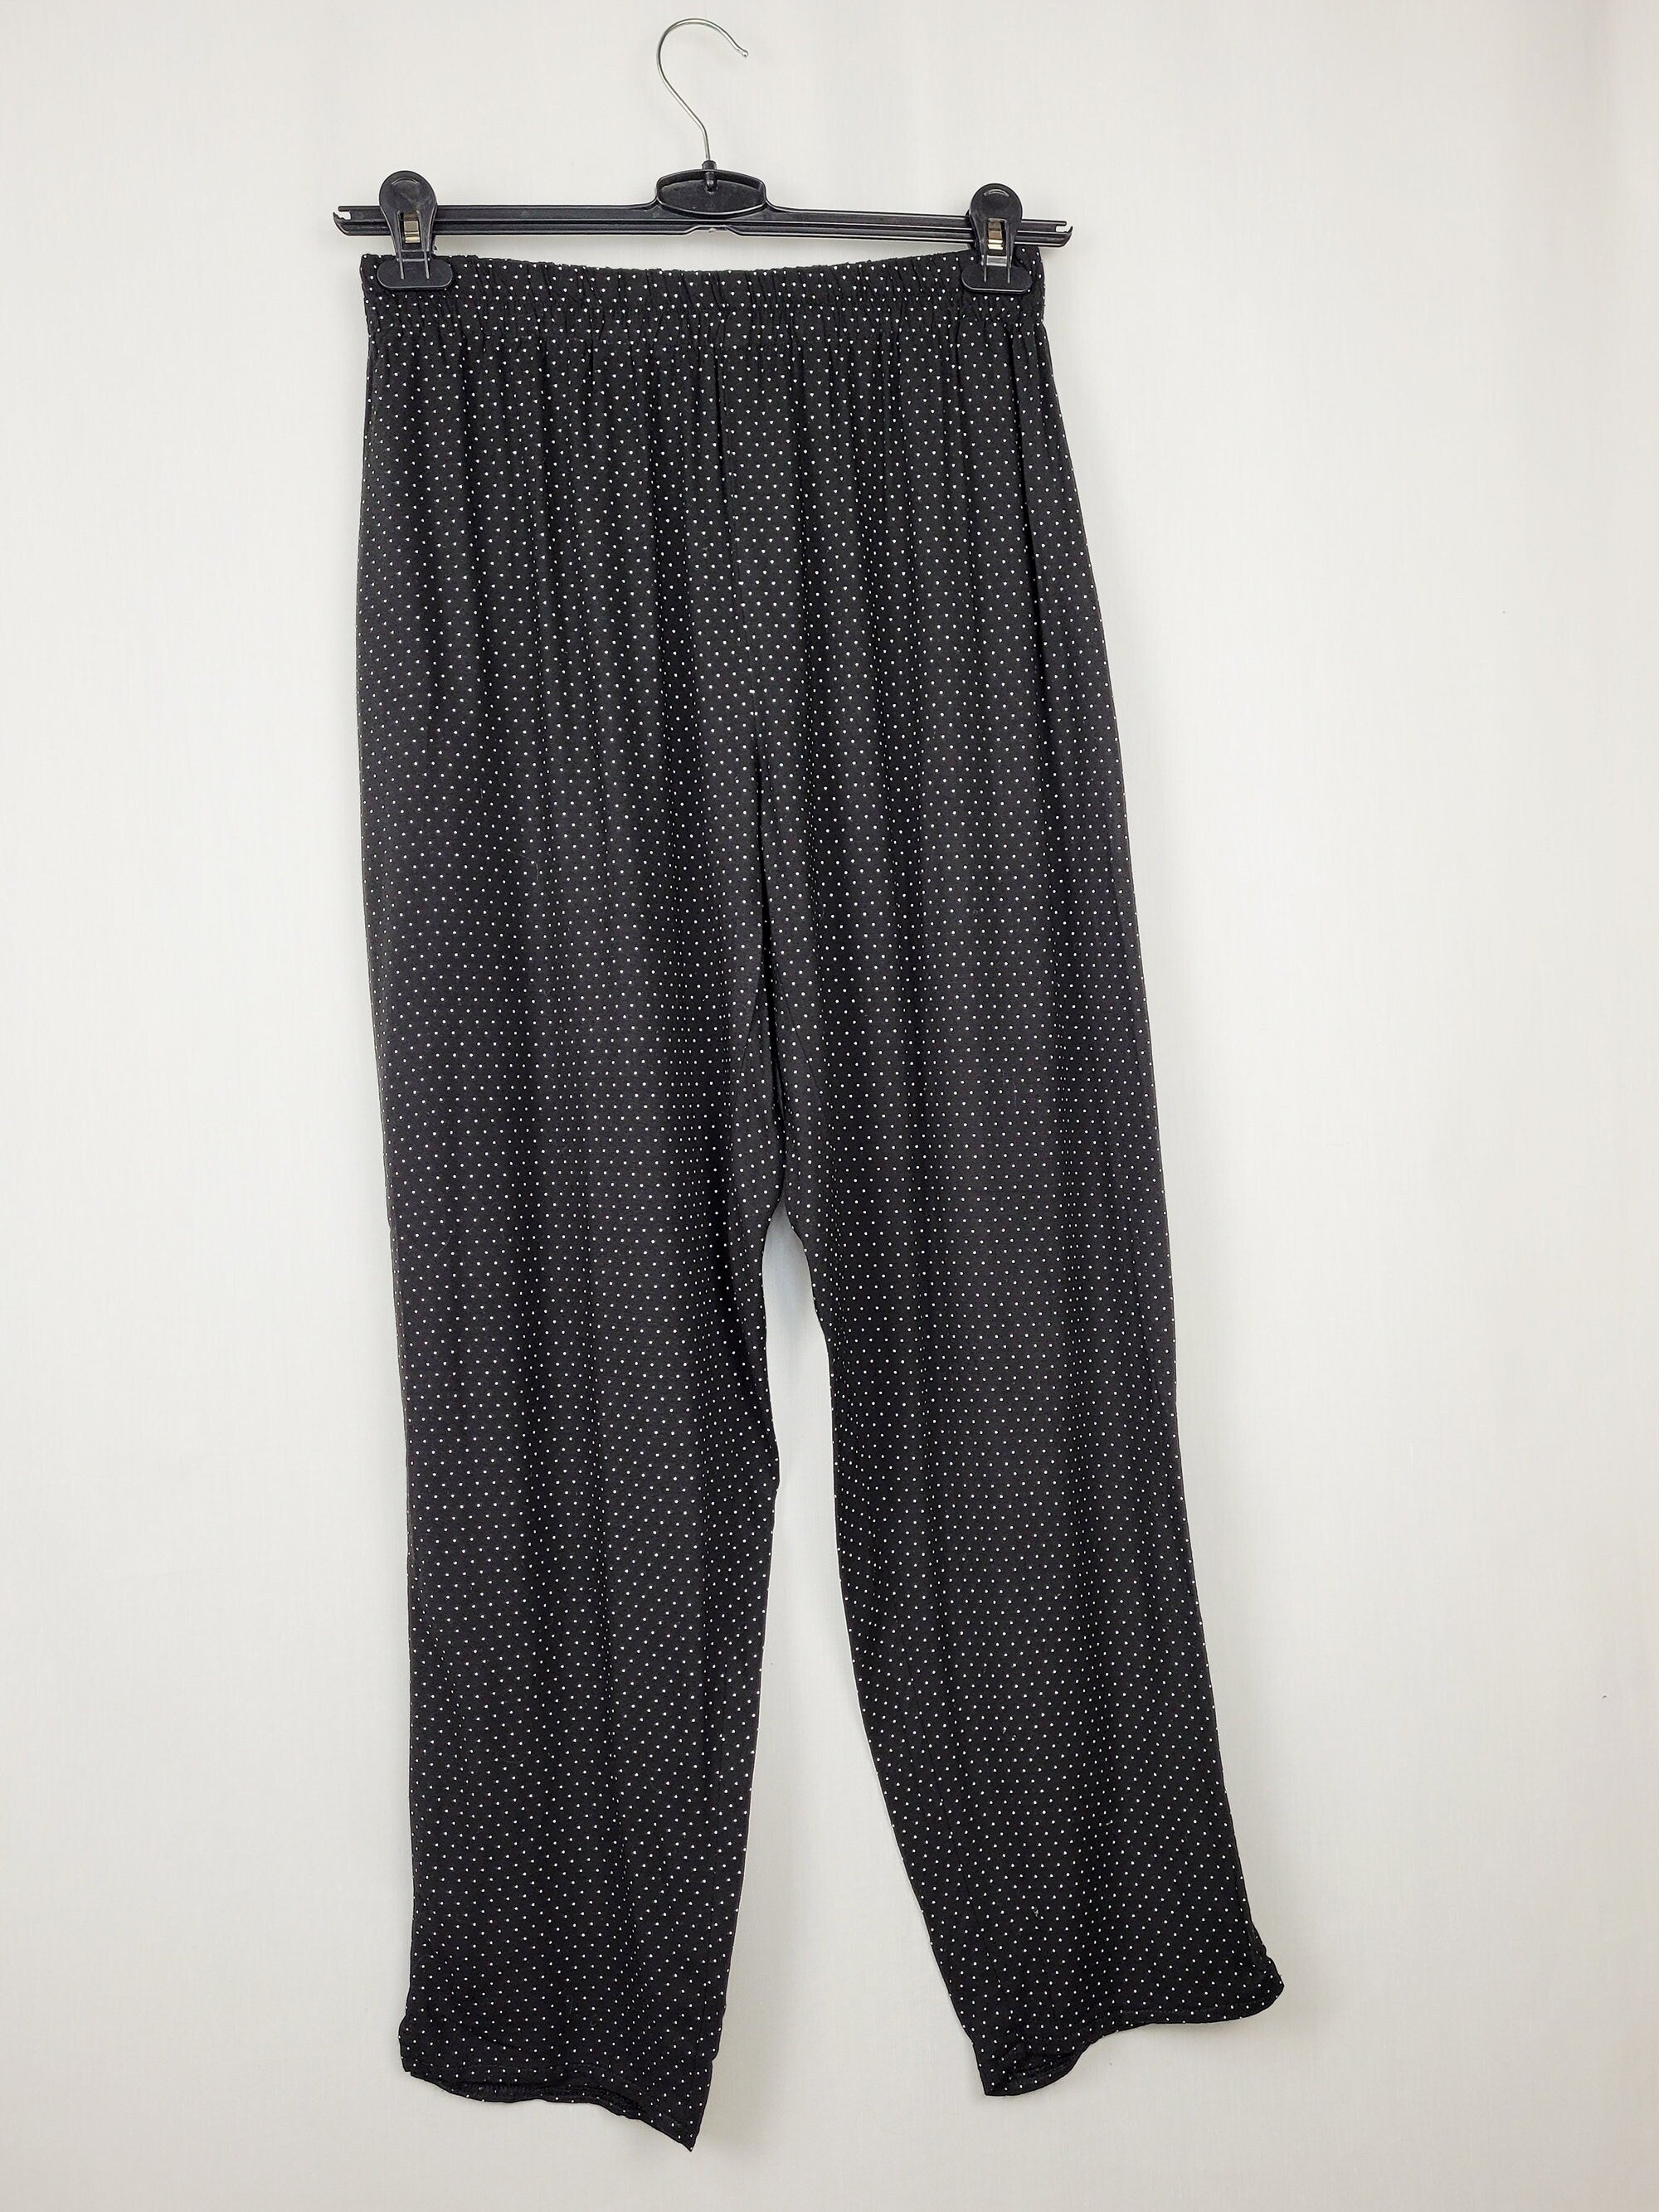 Vintage 90s black polka dot casual summer pants